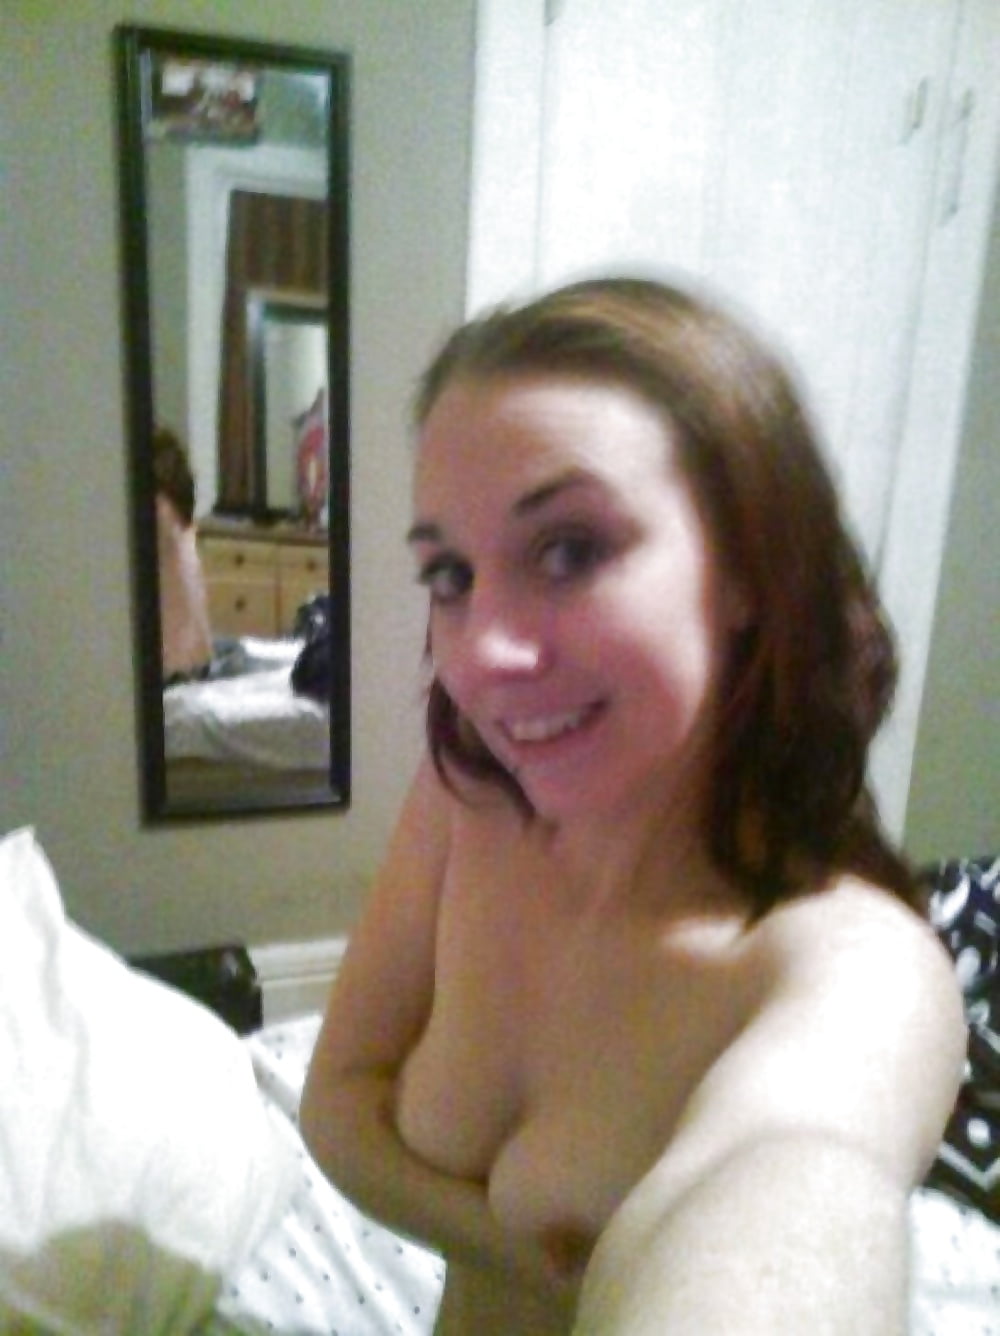 Web Slut Cassie Marie Chappell Of Great Falls Mt Exposed 3 19 Immagini